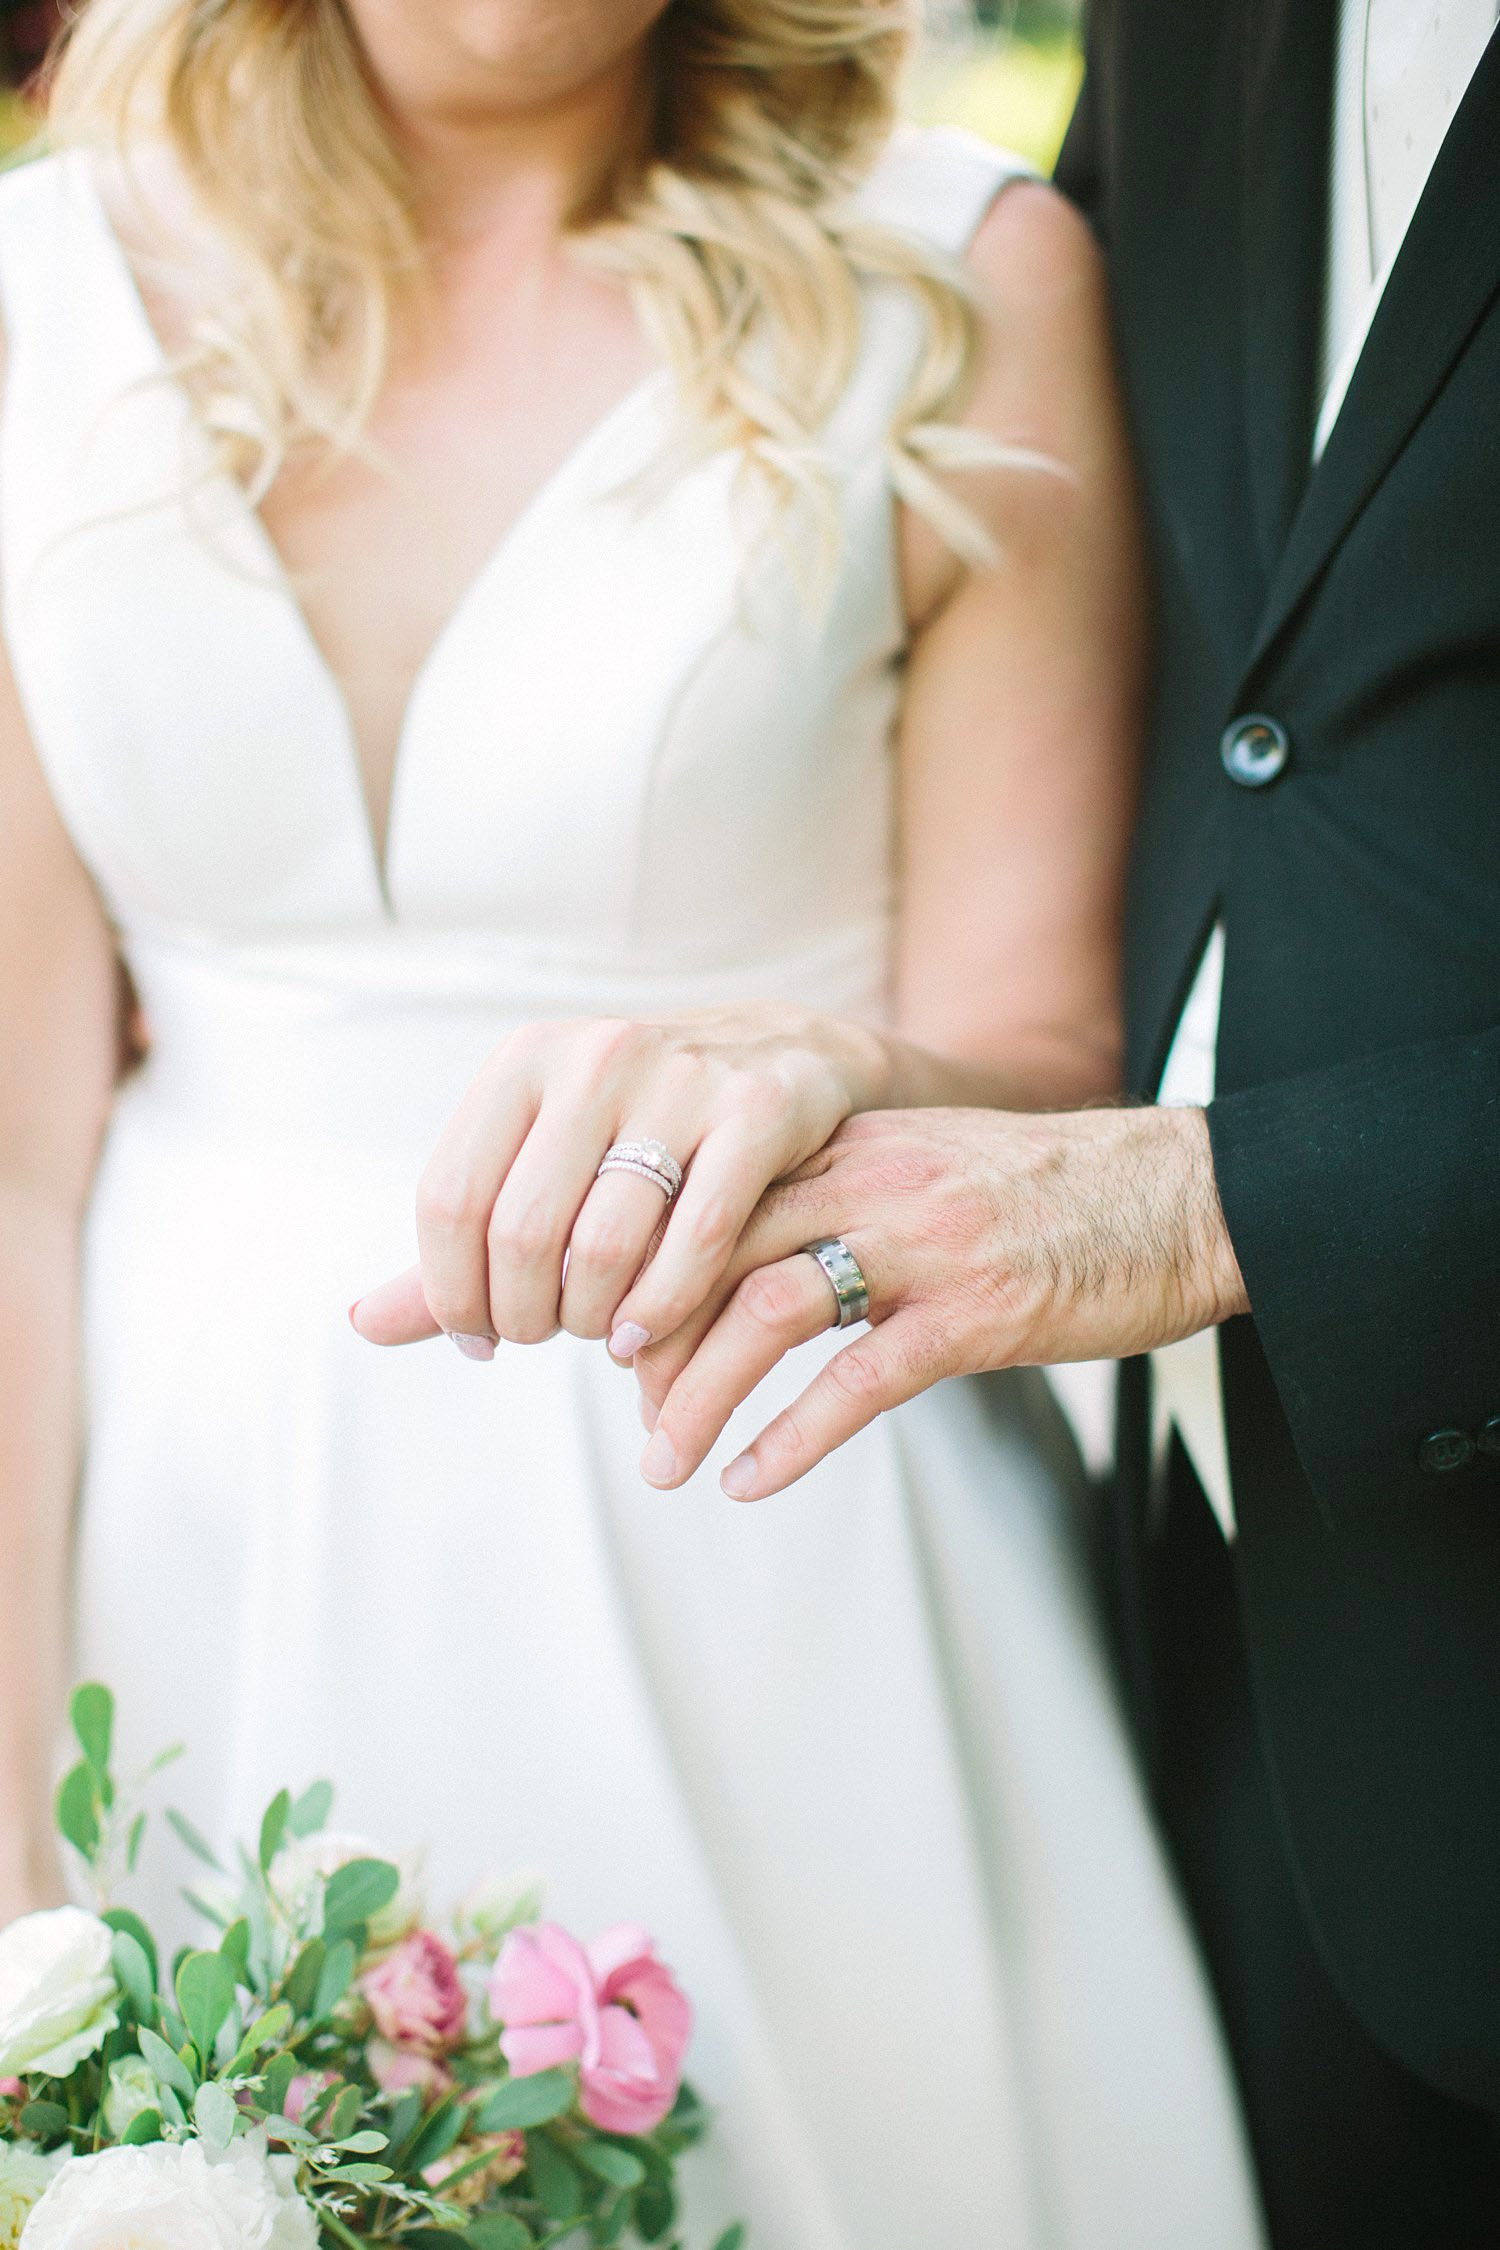 Wedding rings hand over hand